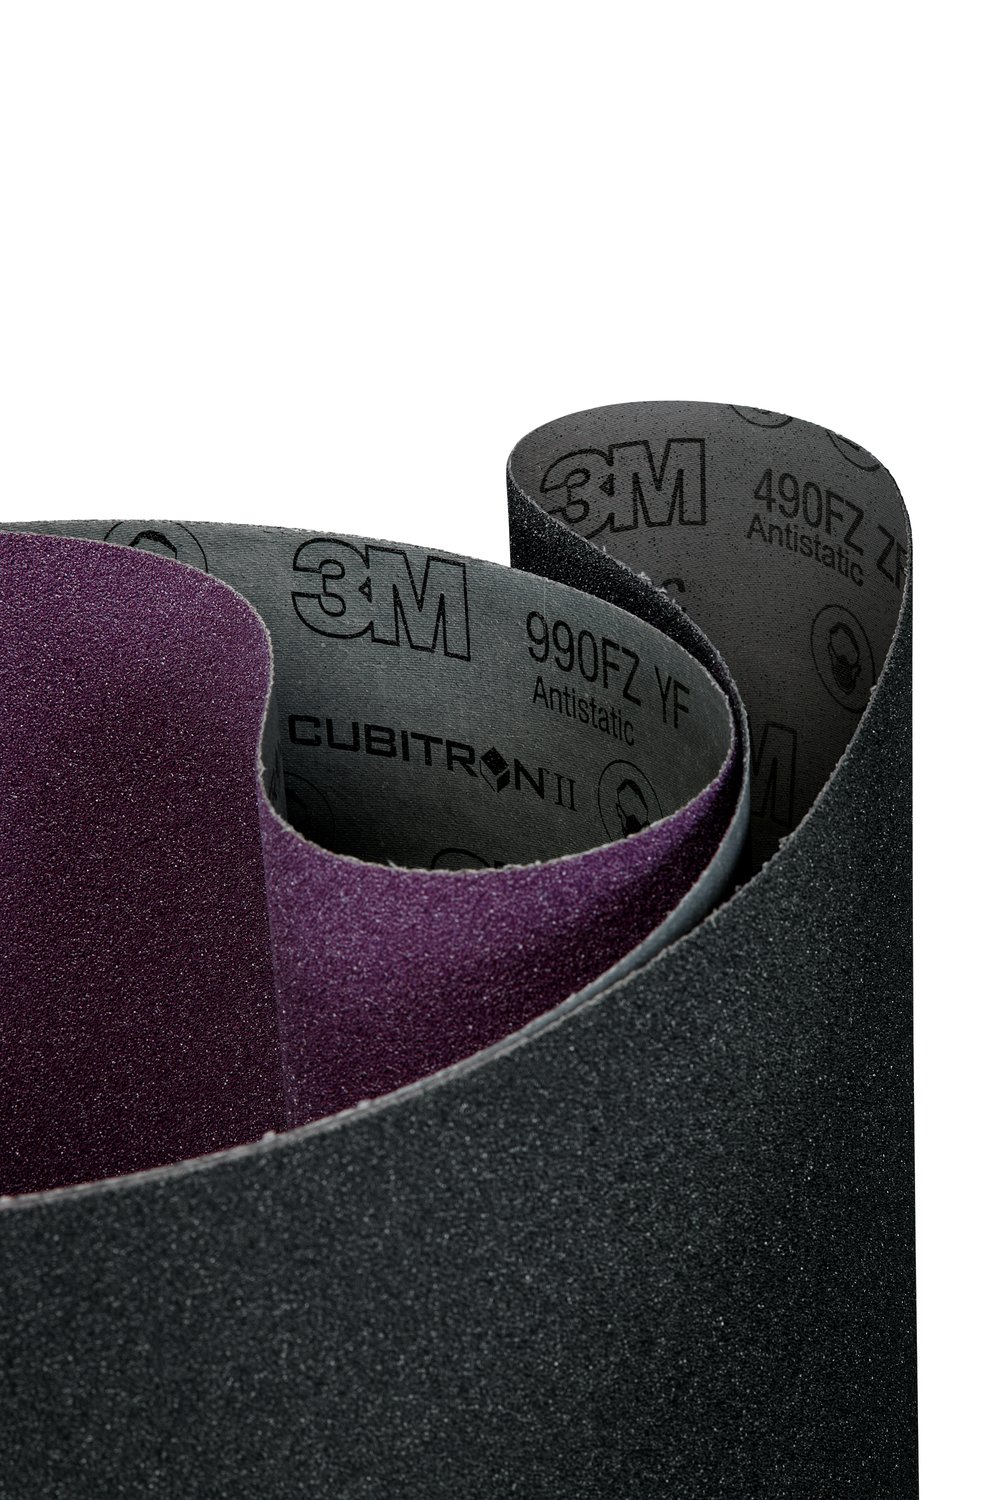 7010513981 - 3M SiC Cloth Belt 490FZ, P120 YF-weight, 25 in x 75 in, Film-lok,
Single-flex